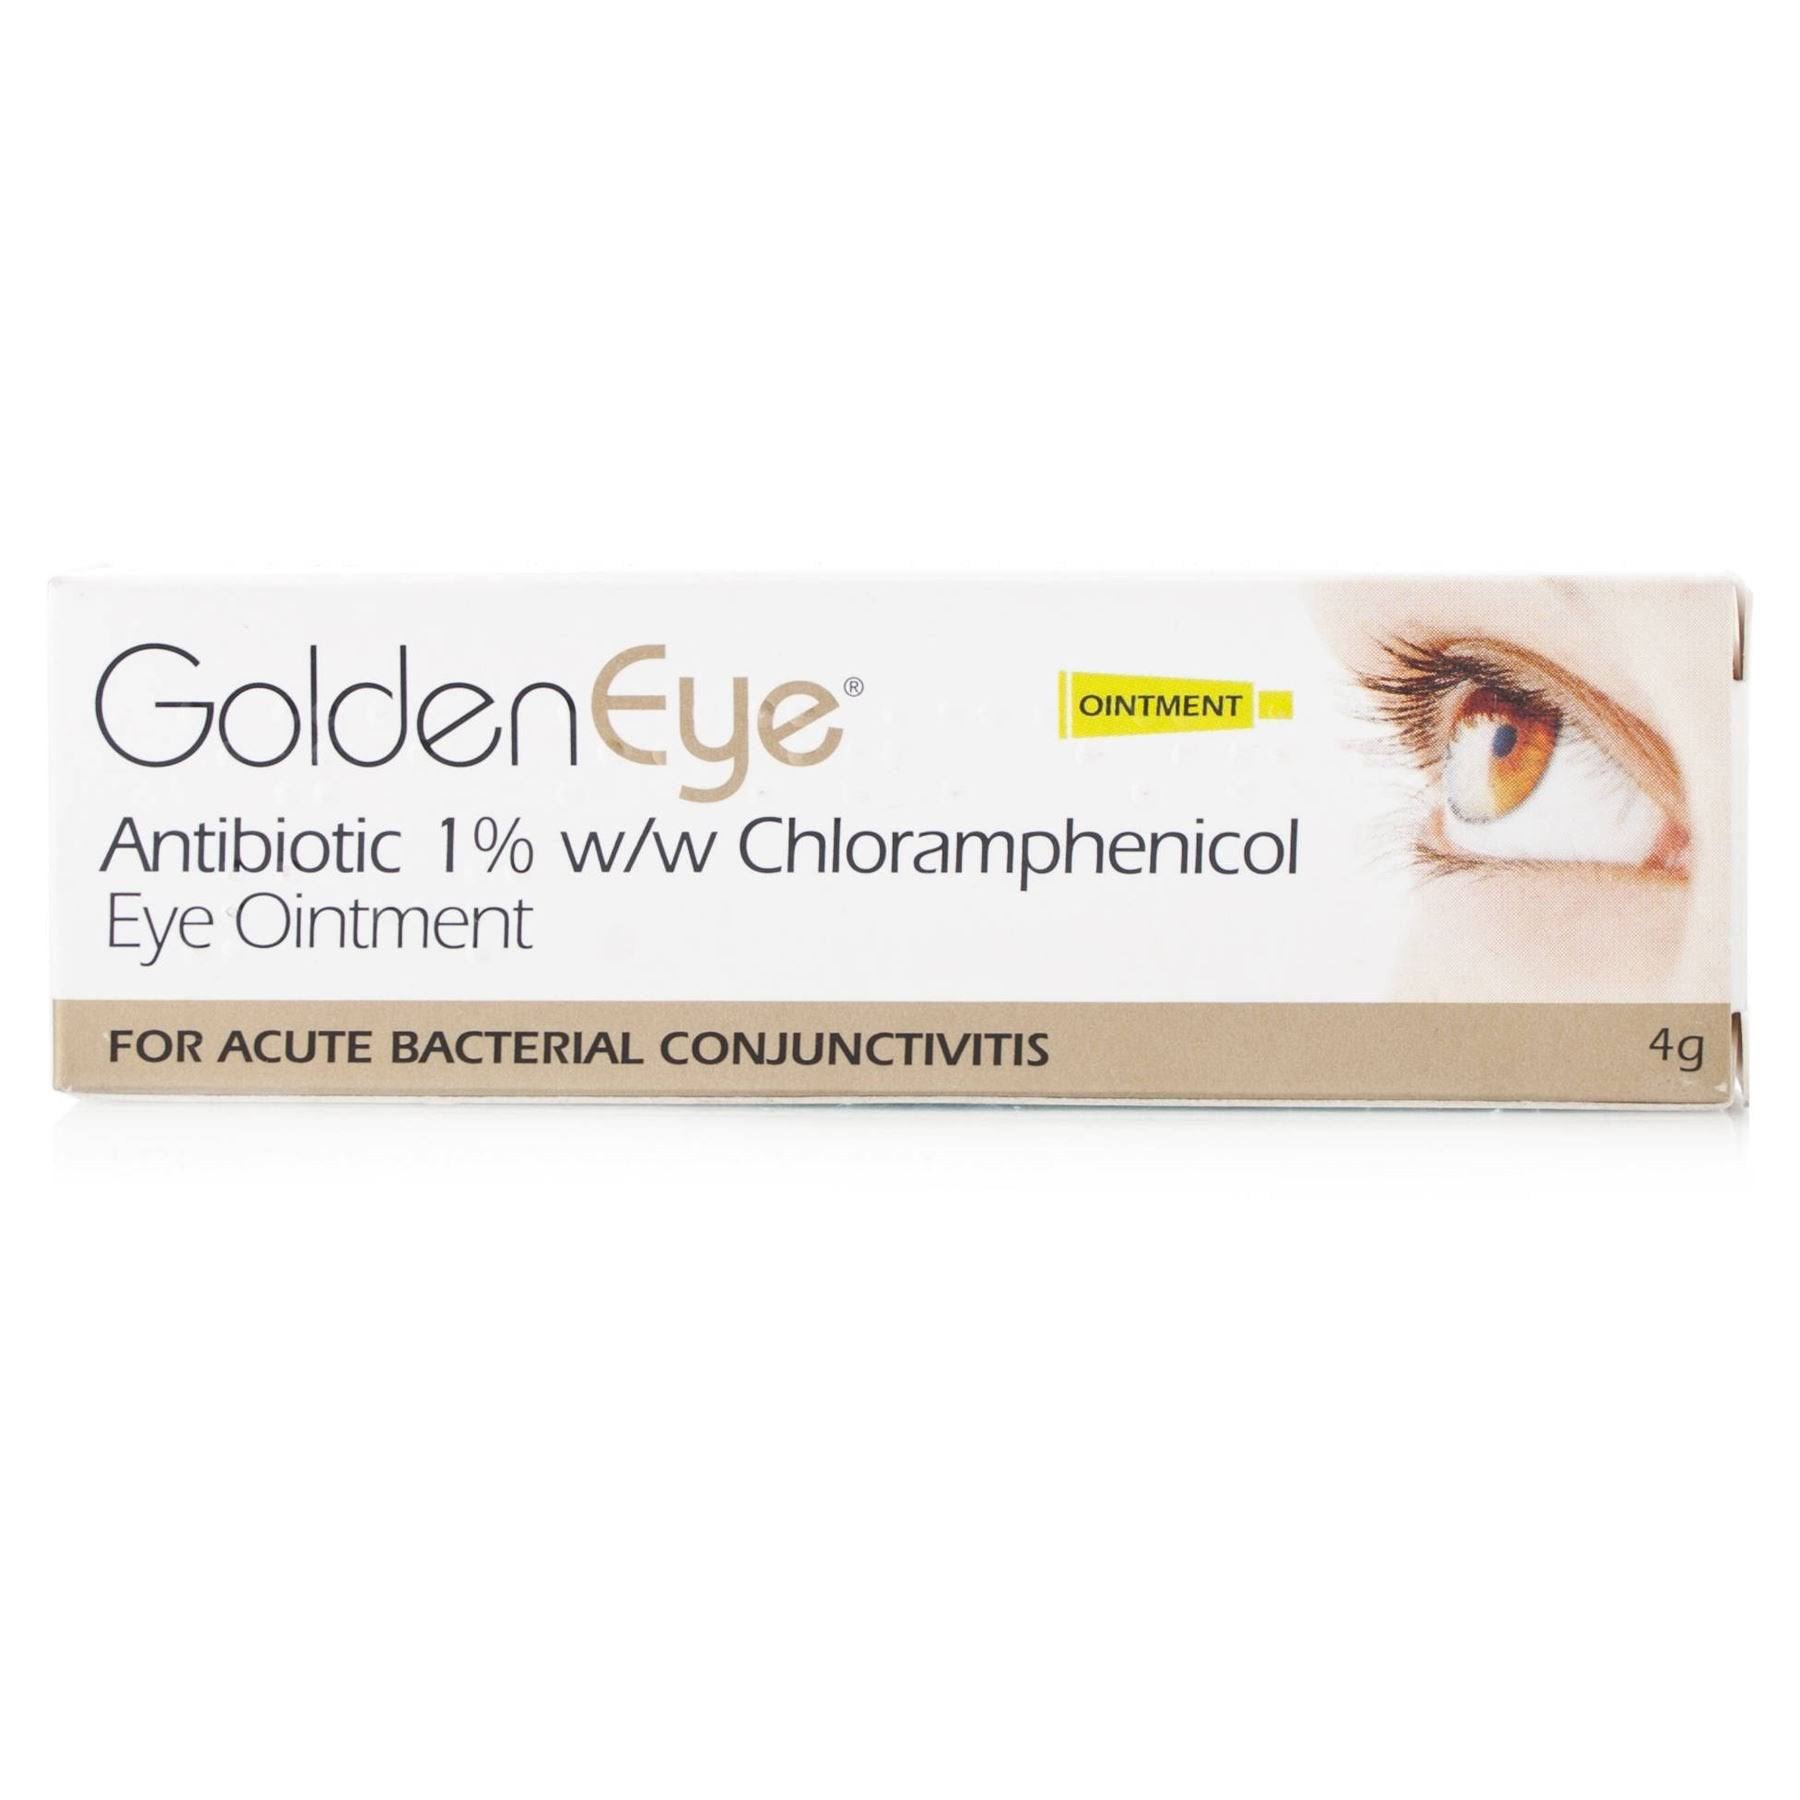 Golden Eye Antibiotic Chloramphenicol Eye Ointment - 4g